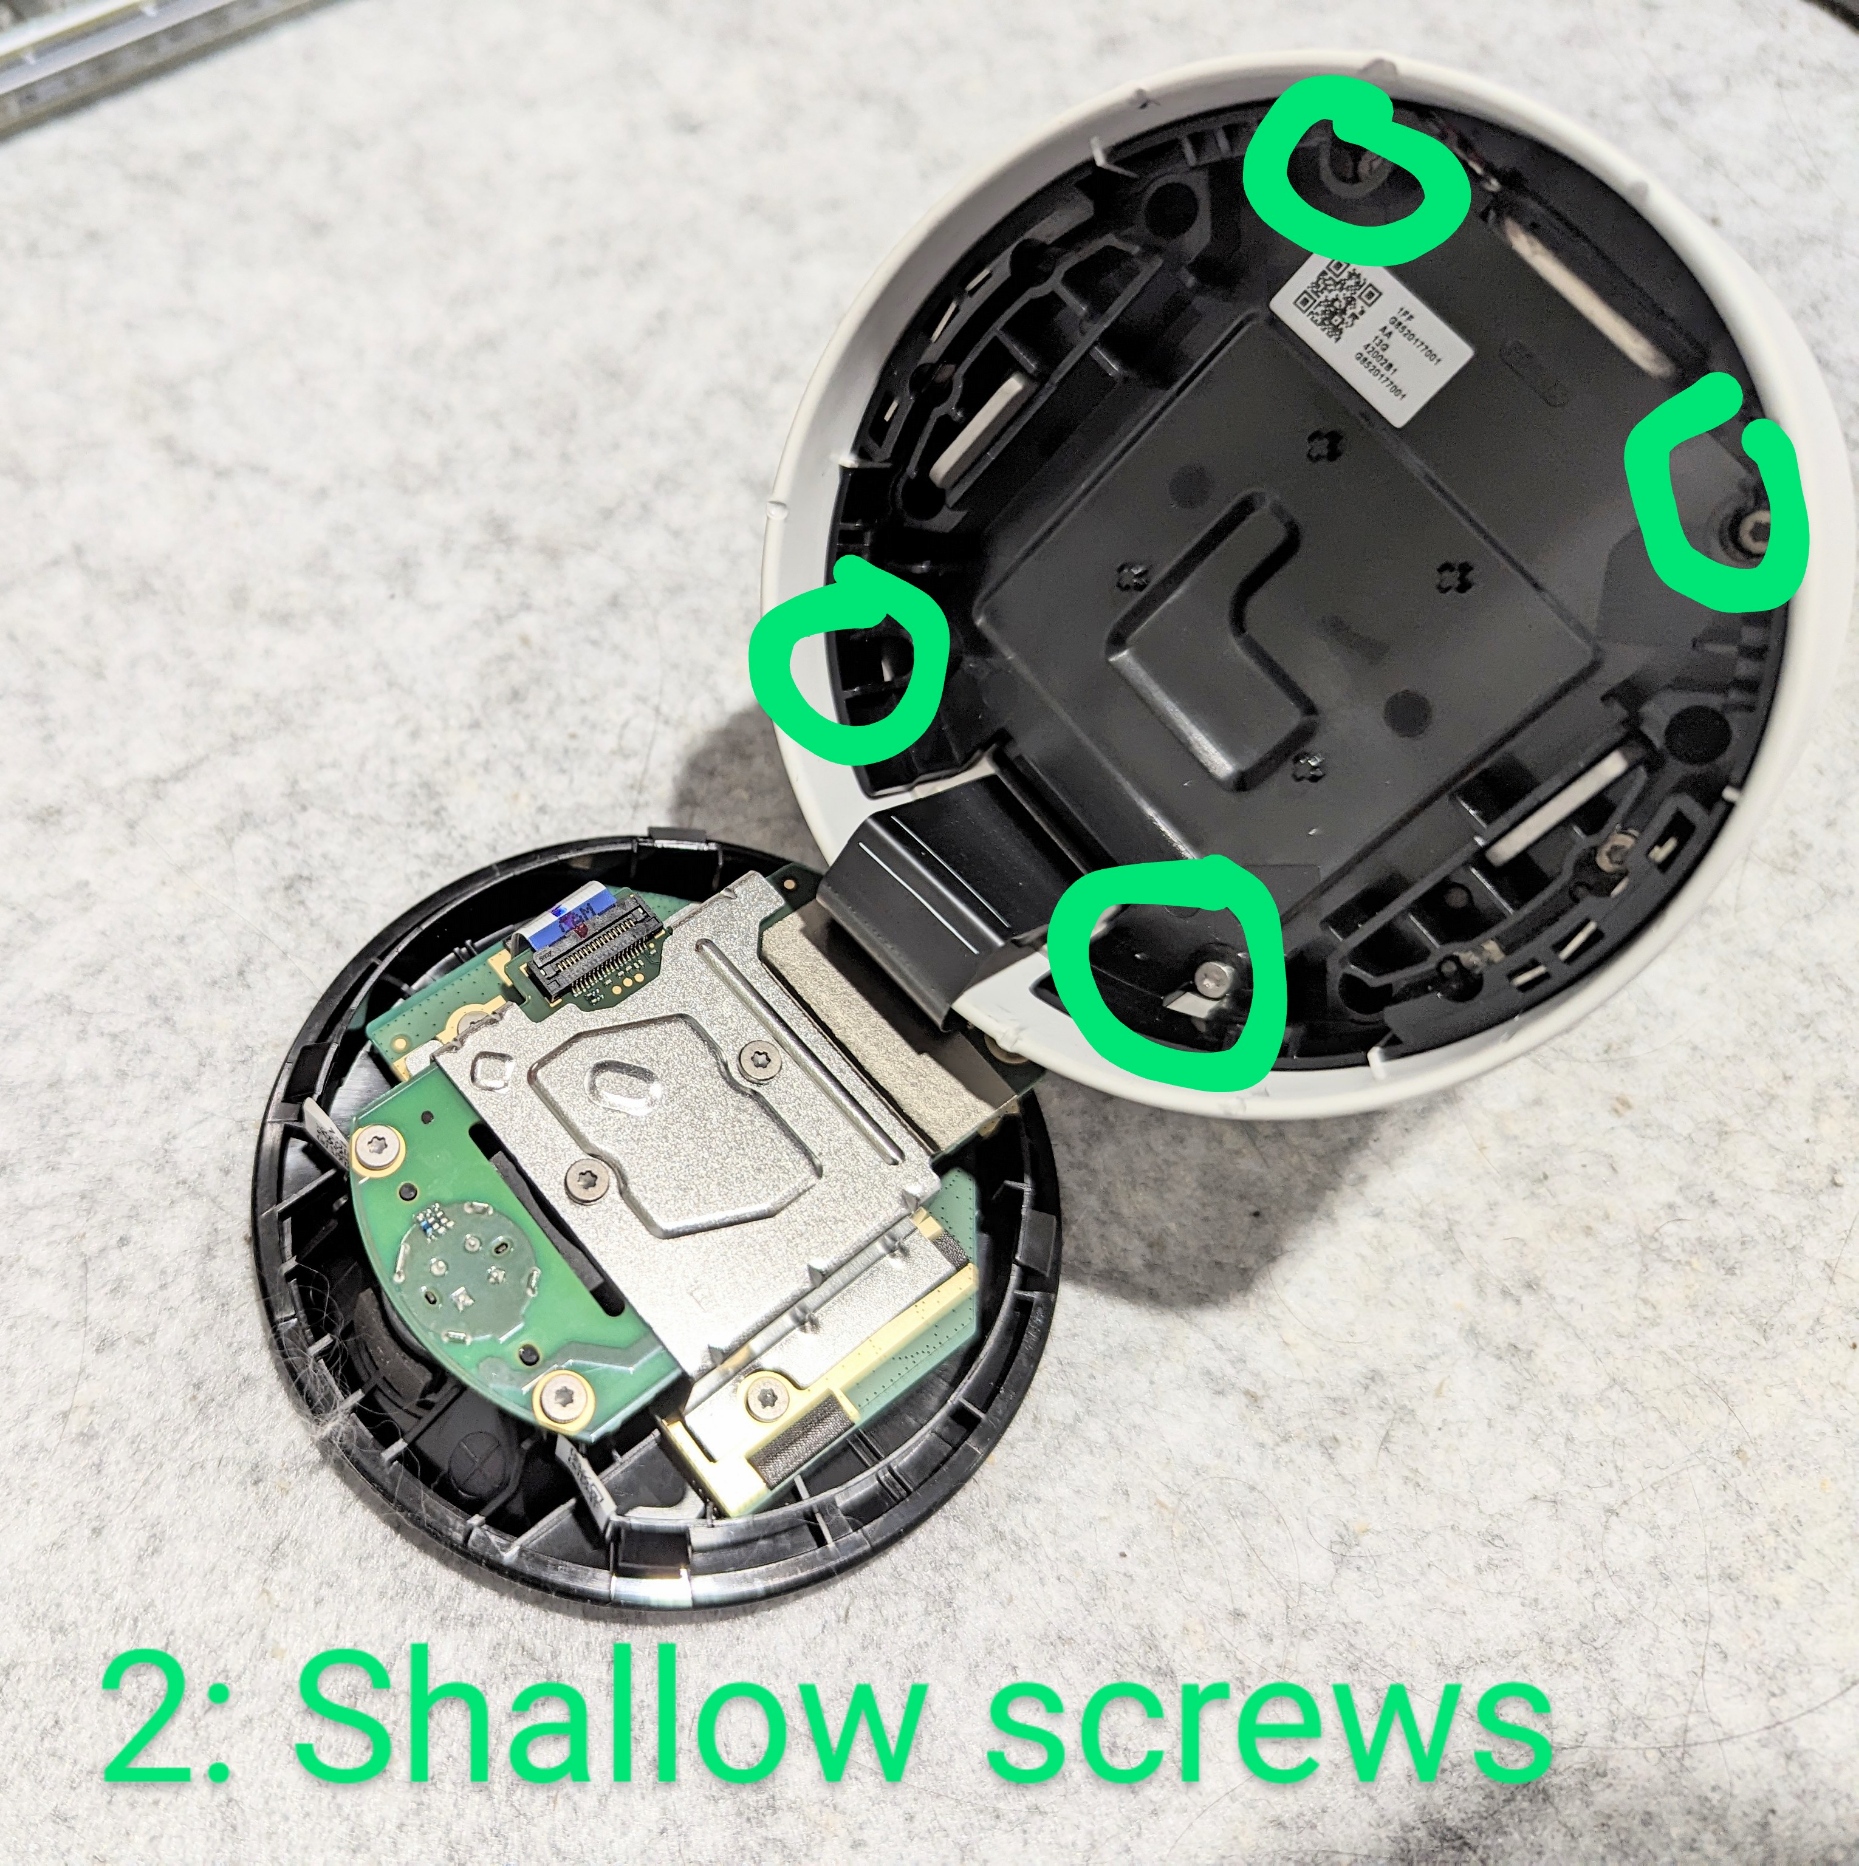 the shallow screws